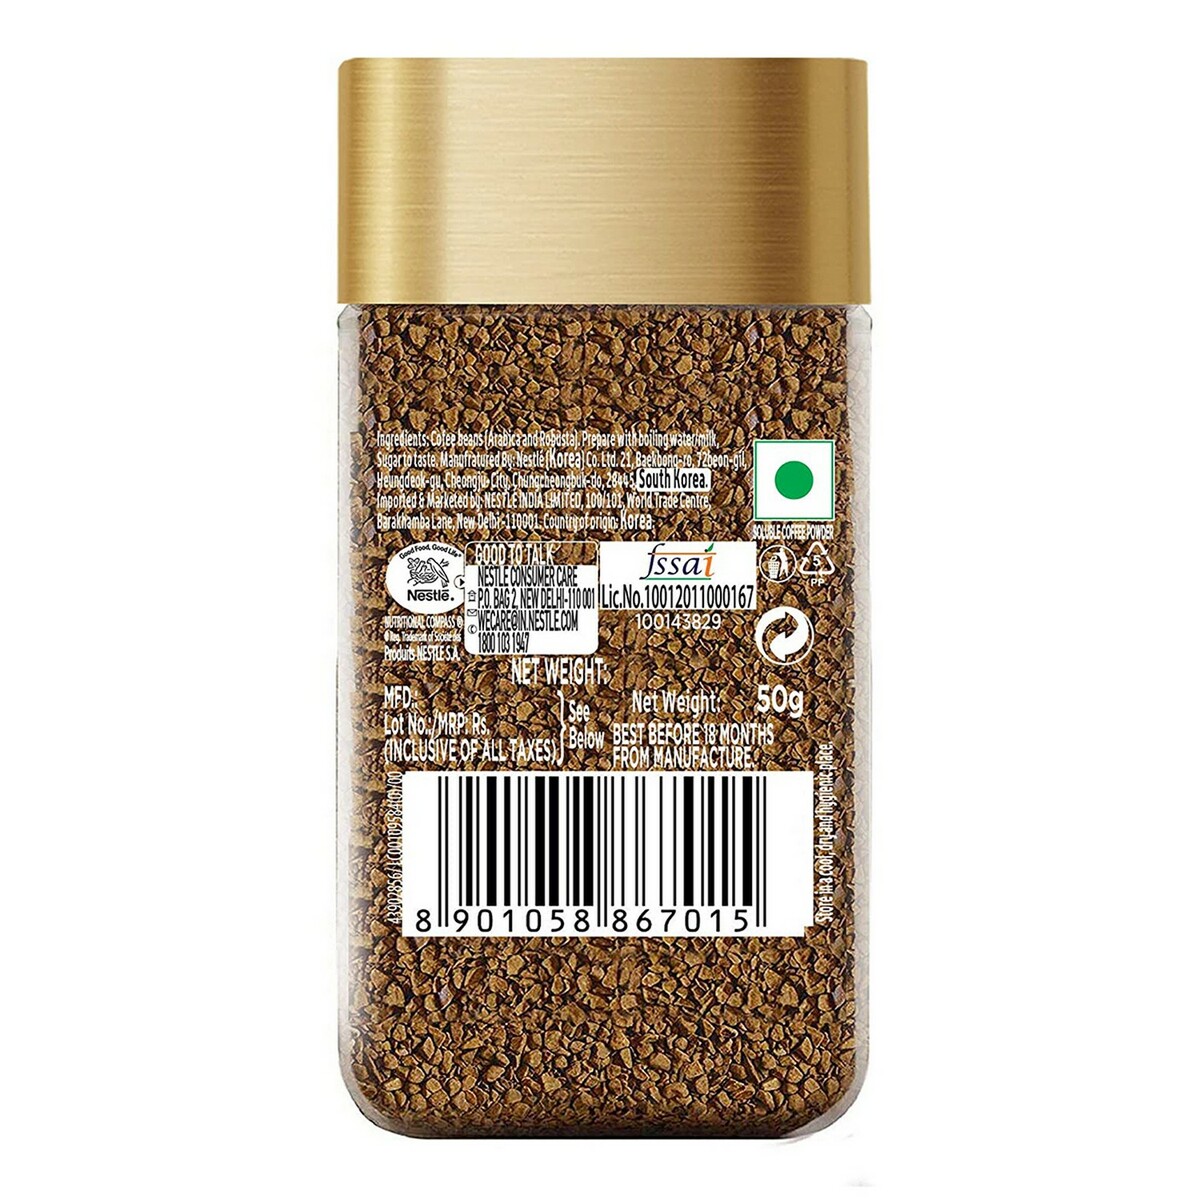 Nescafe Gold Jar 50gm